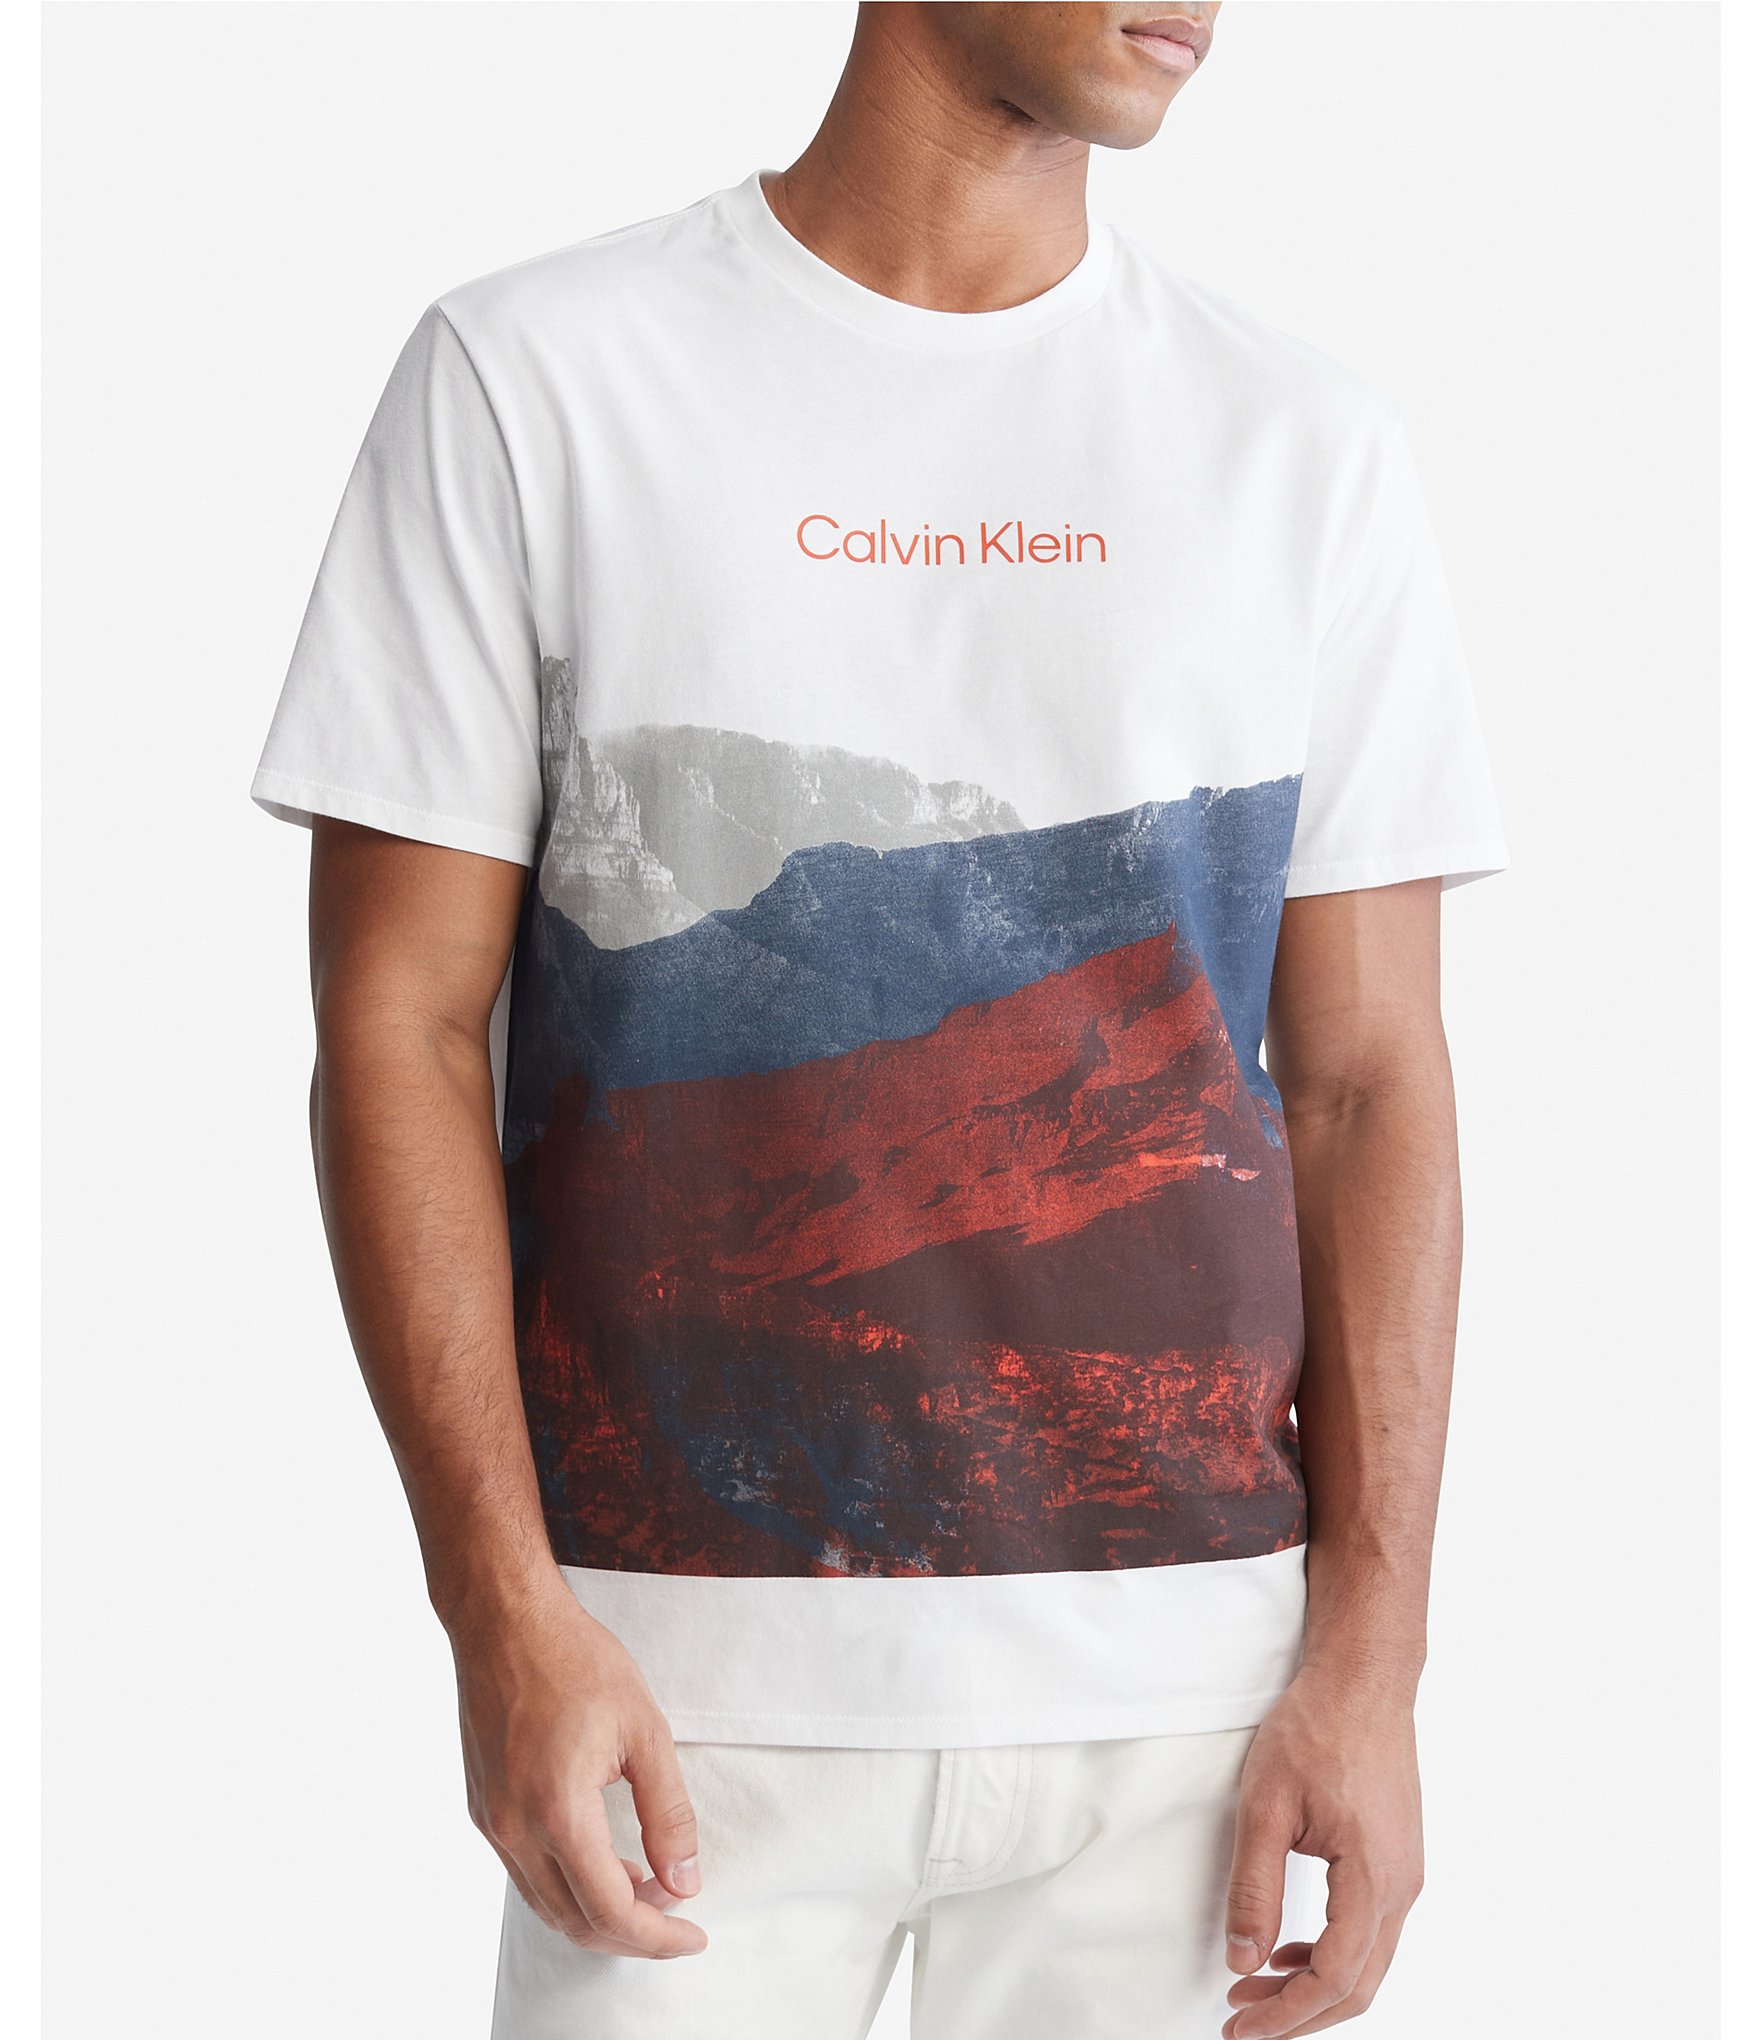 Calvin Klein Men's Spotted Brand T-Shirt